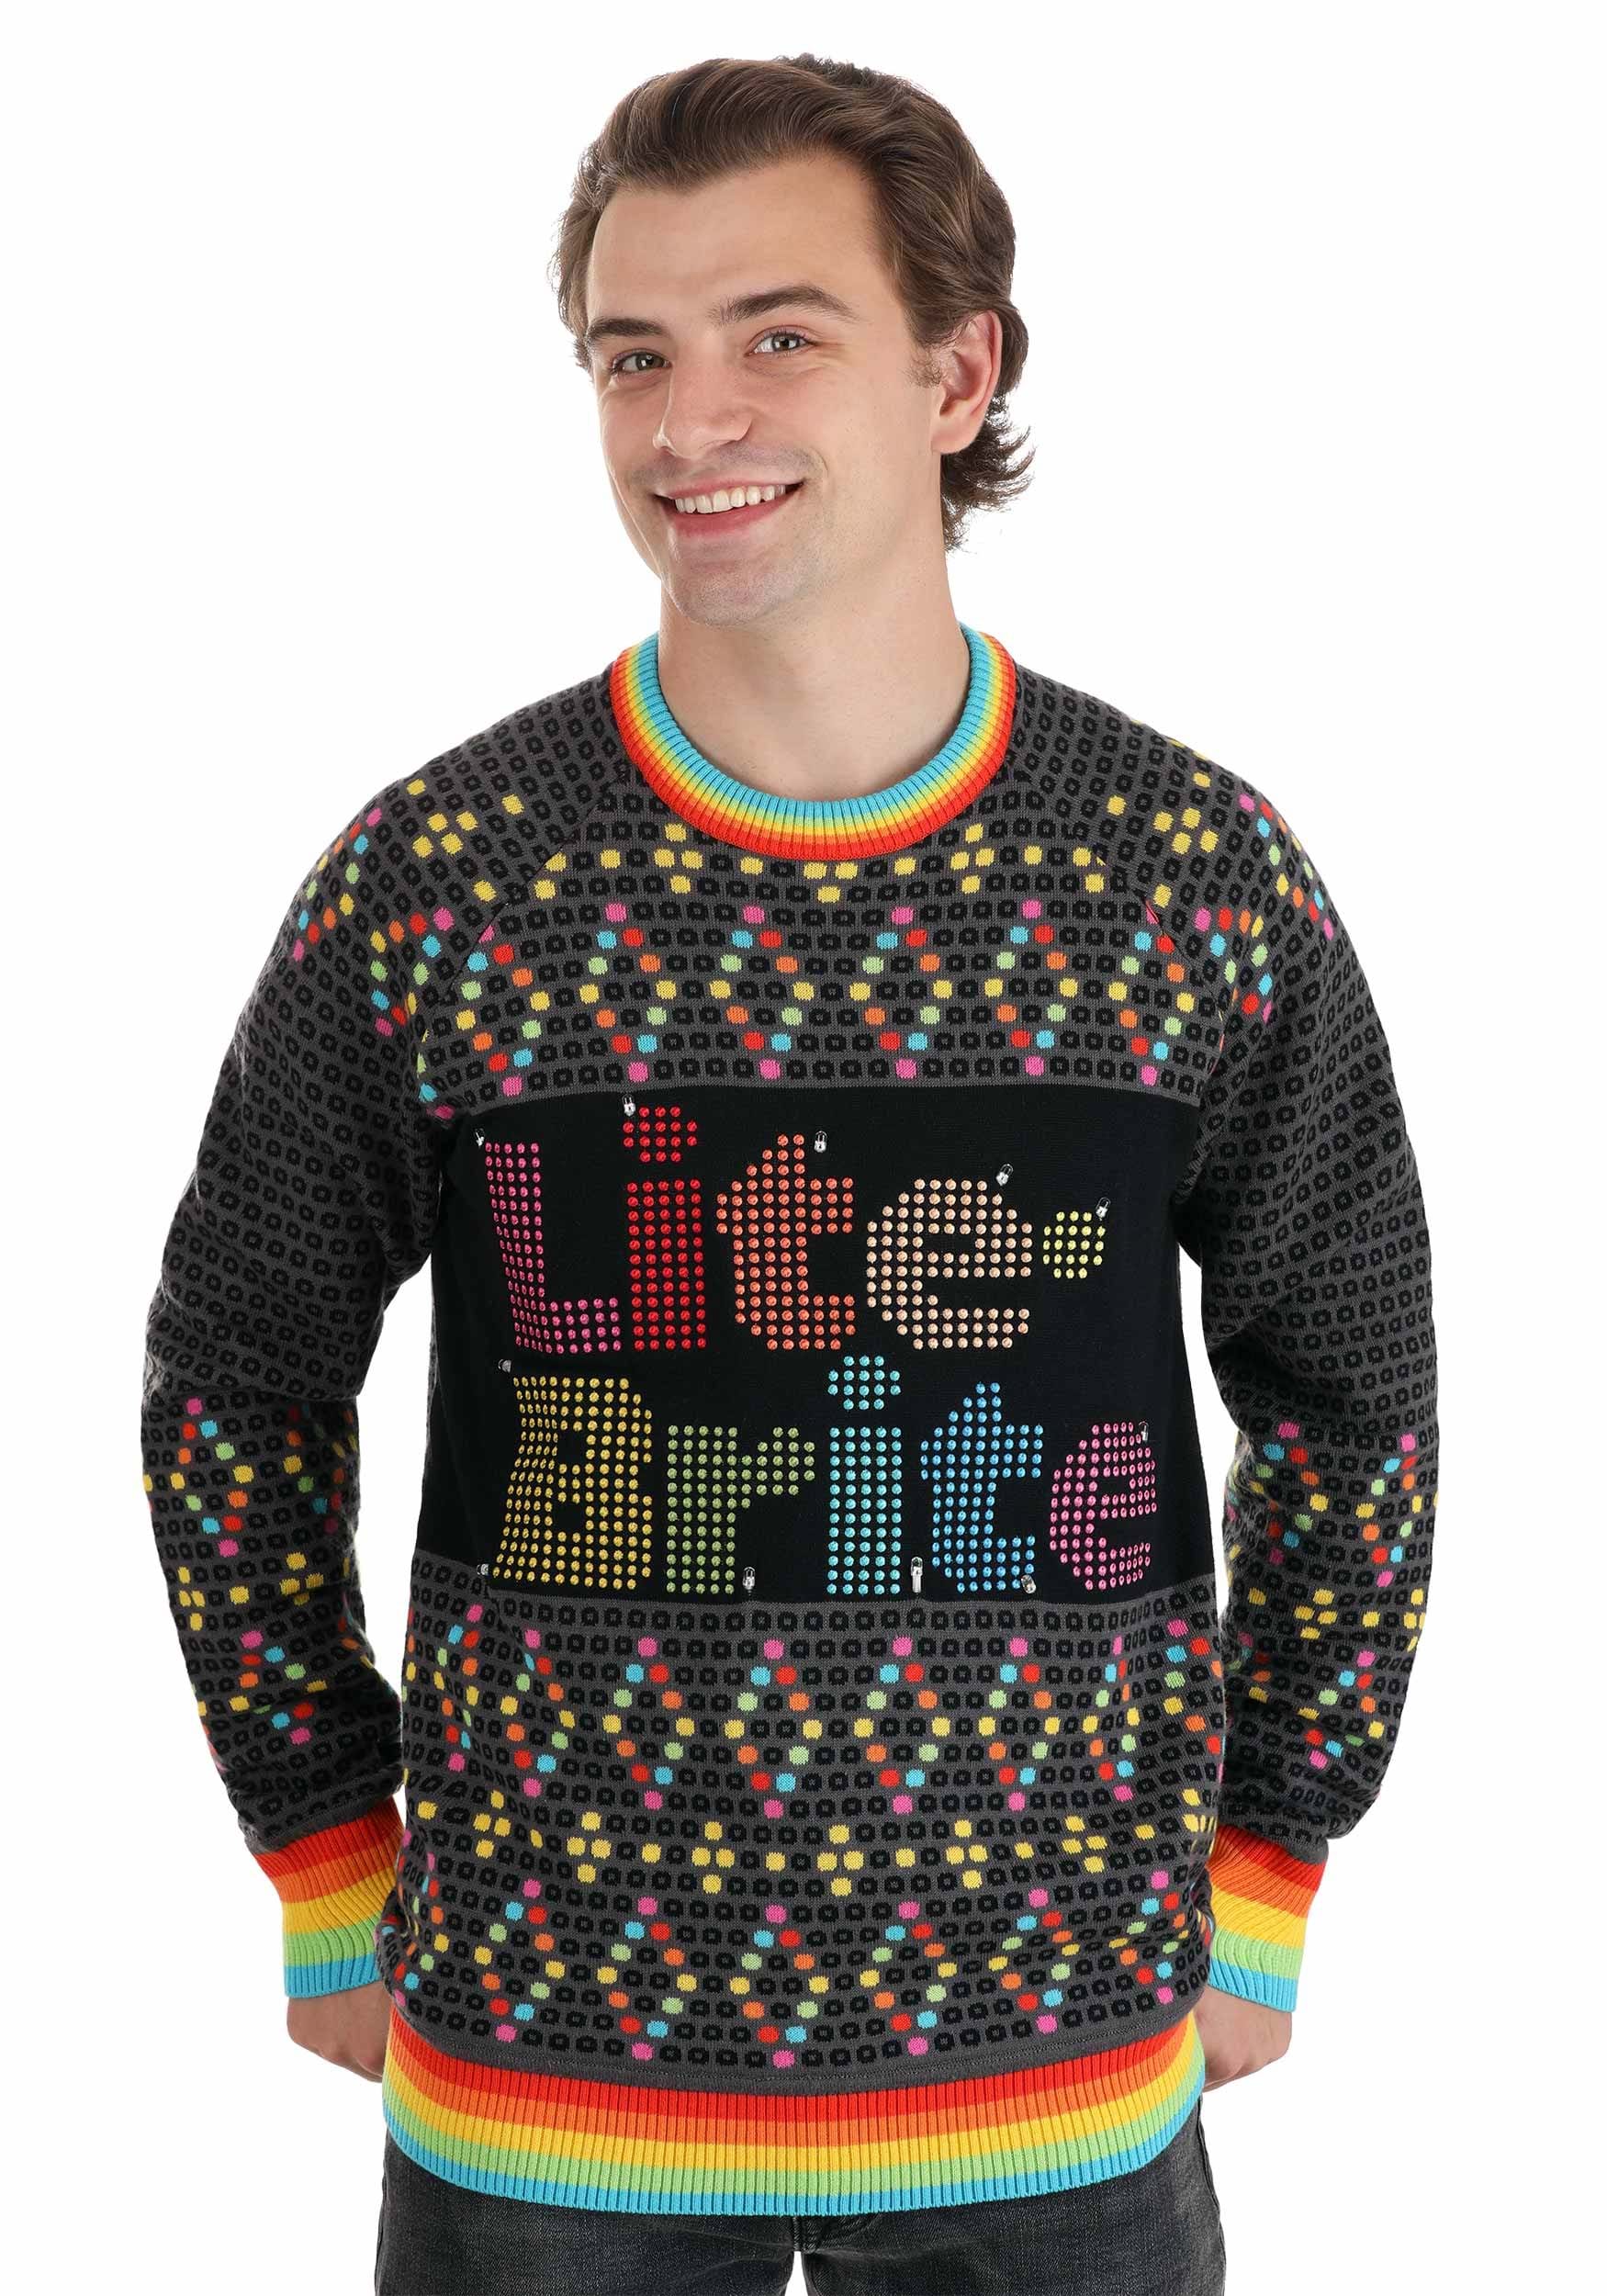 Adult Hasbro Lite Brite Christmas Sweater